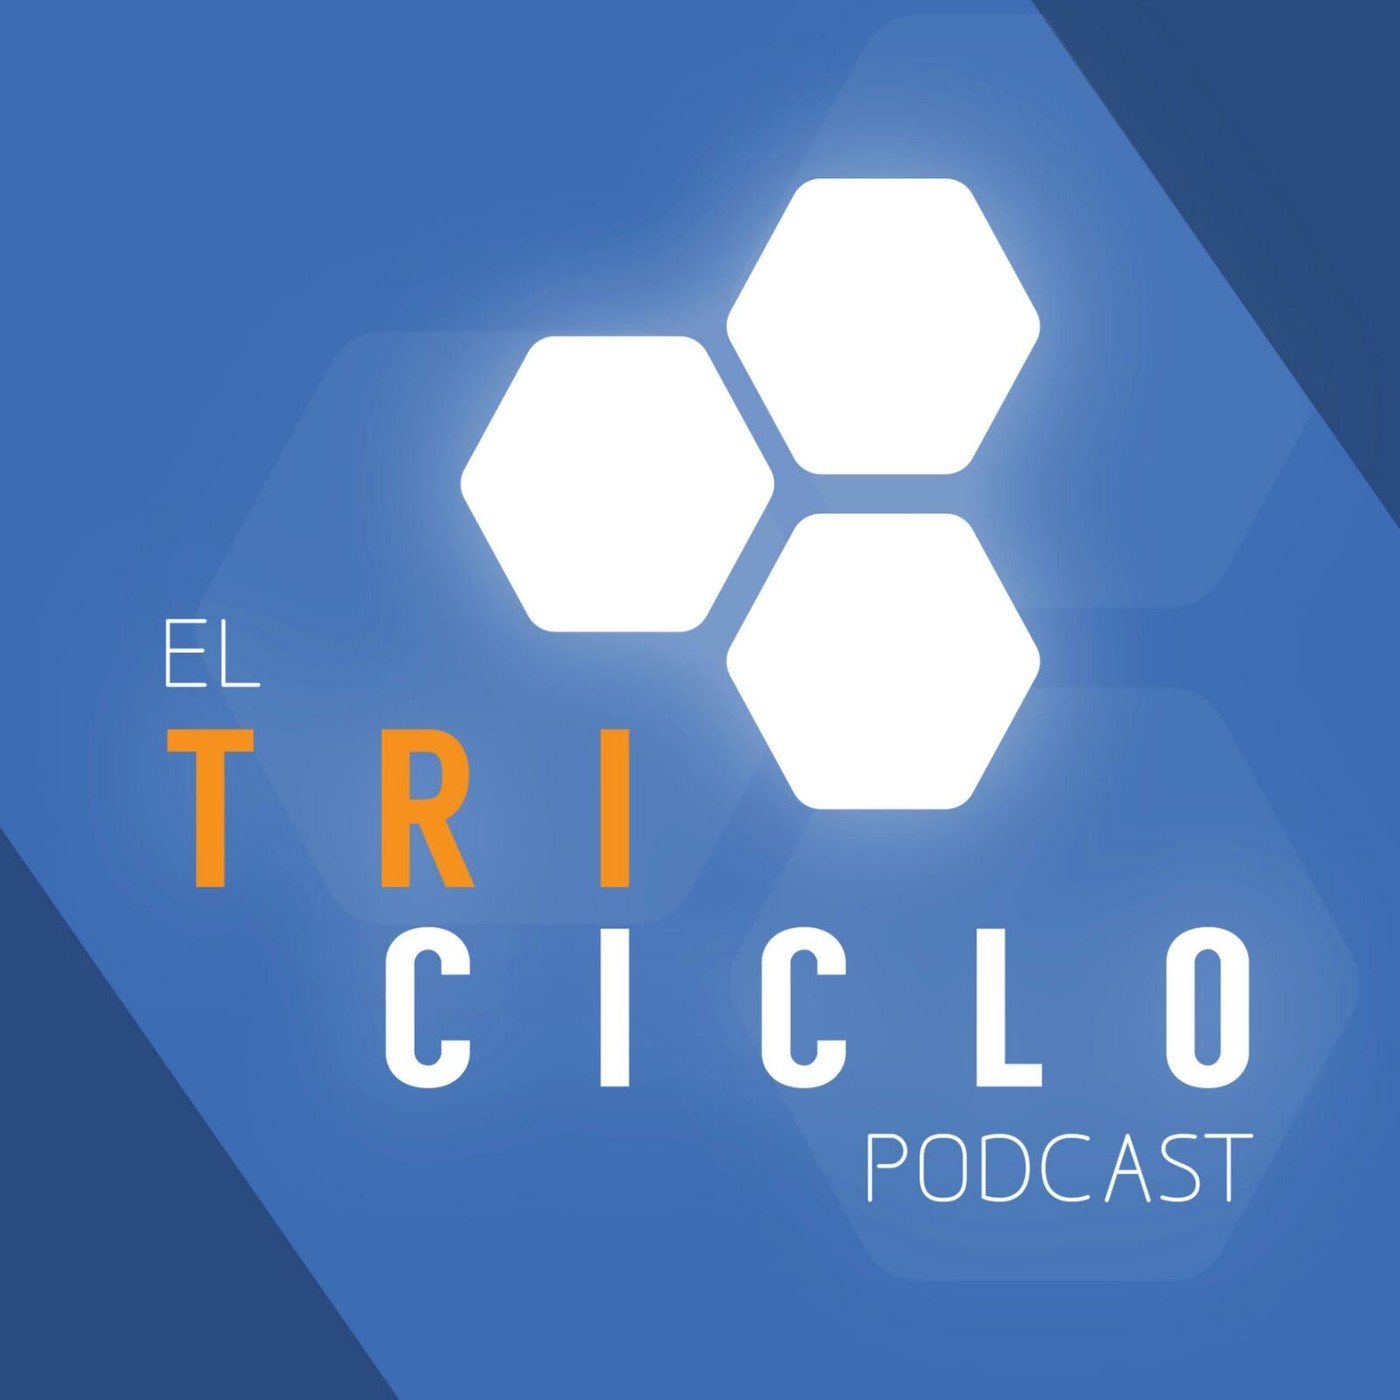 El triciclo Podcast